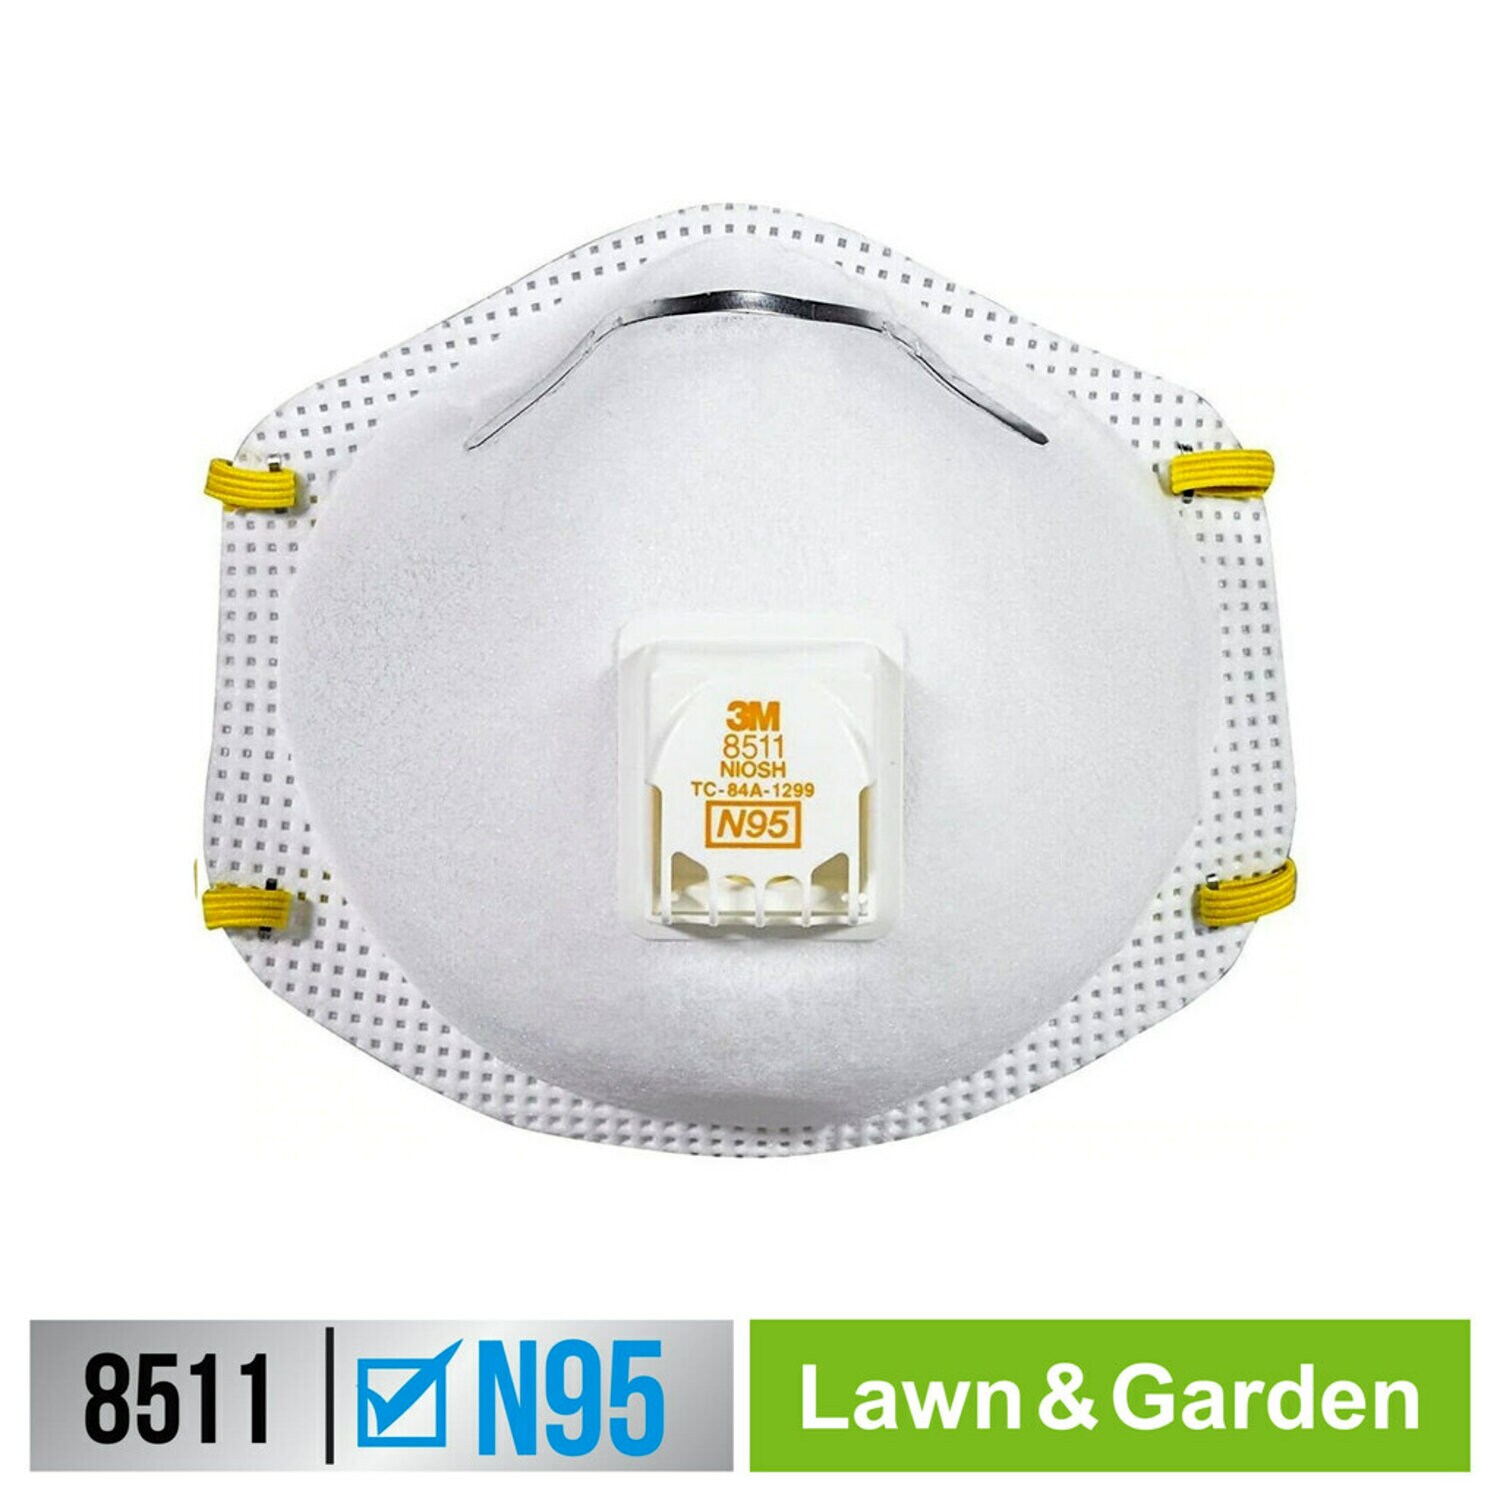 7100182264 - 3M Lawn & Garden Valved Respirator 8511G2-DC-PS, 2 each/pack, 3
packs/case